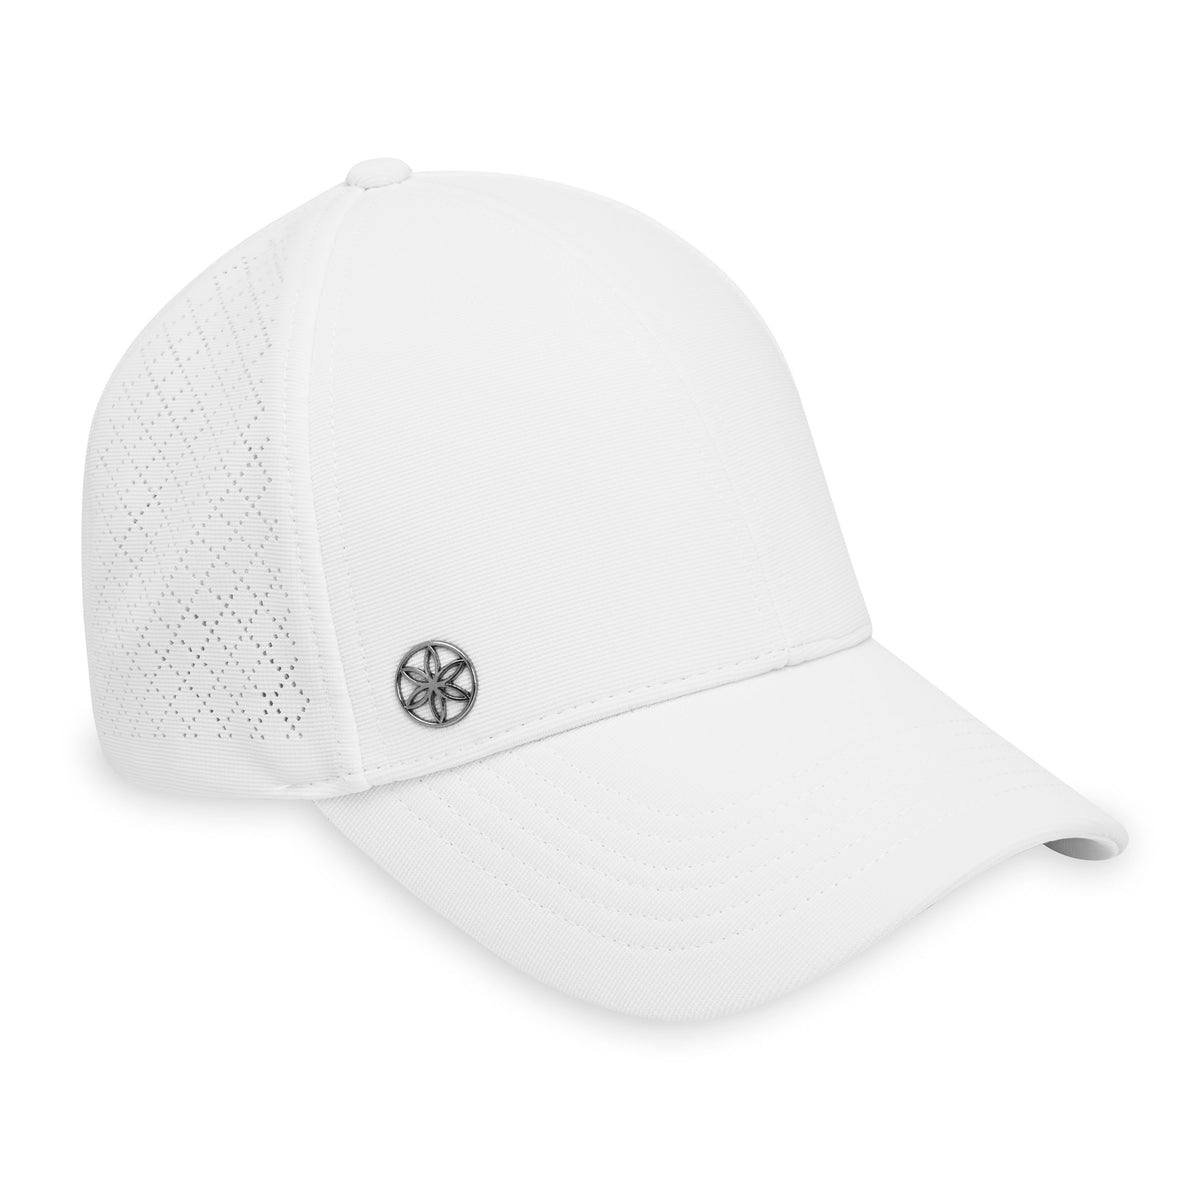 Gaiam Women's Hat-Breathable Ball Cap, Pre-Shaped Bill, Adjustable